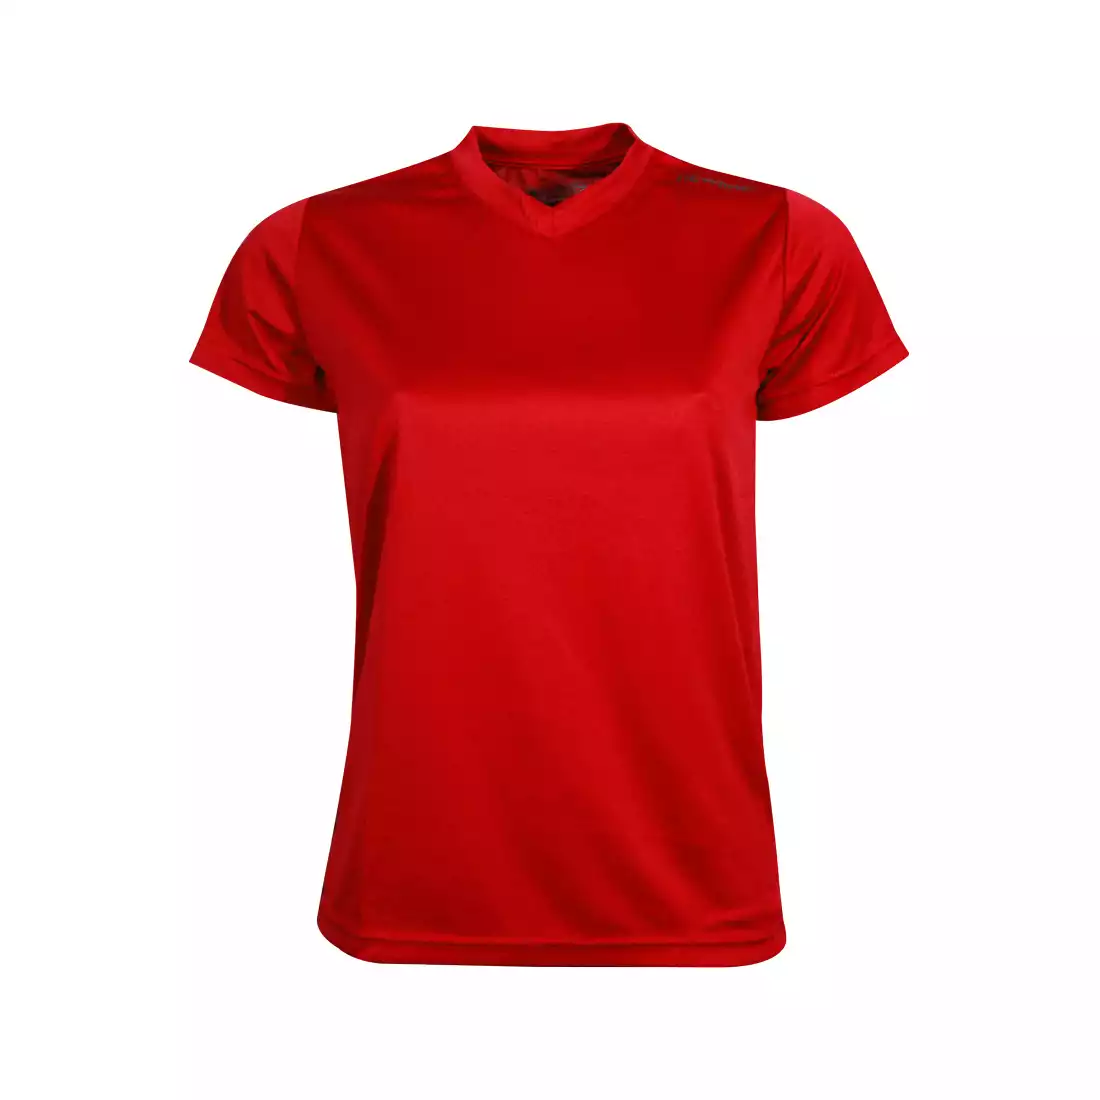 NEWLINE BASE COOL T-SHIRT - damska koszulka do biegania 13614-04